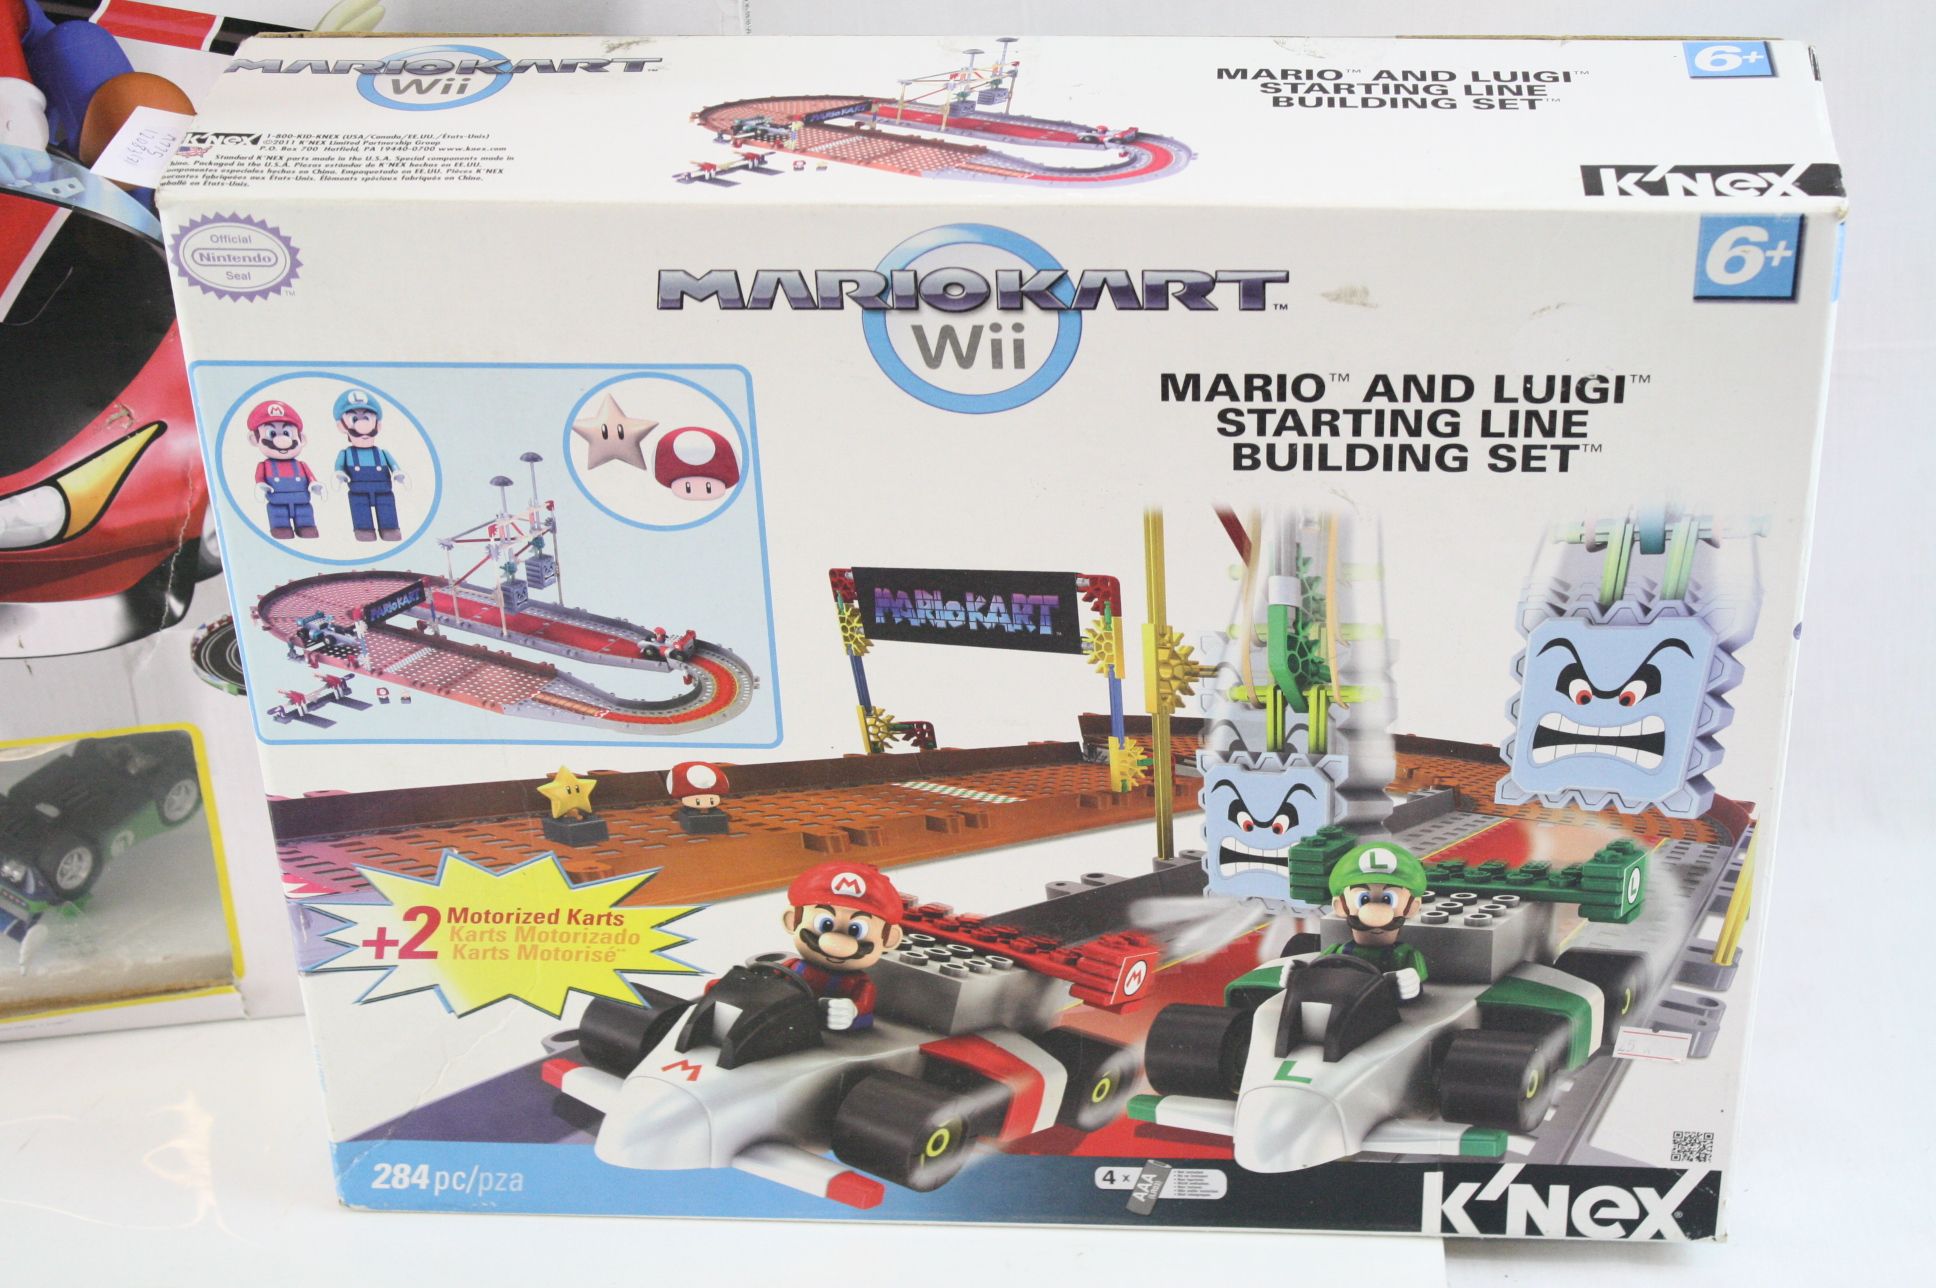 Boxed Carrera Go Nintendo Mario Kart 1:43 slot car racing set and boxed K'Nex Nintendo Mario Kart - Image 2 of 4